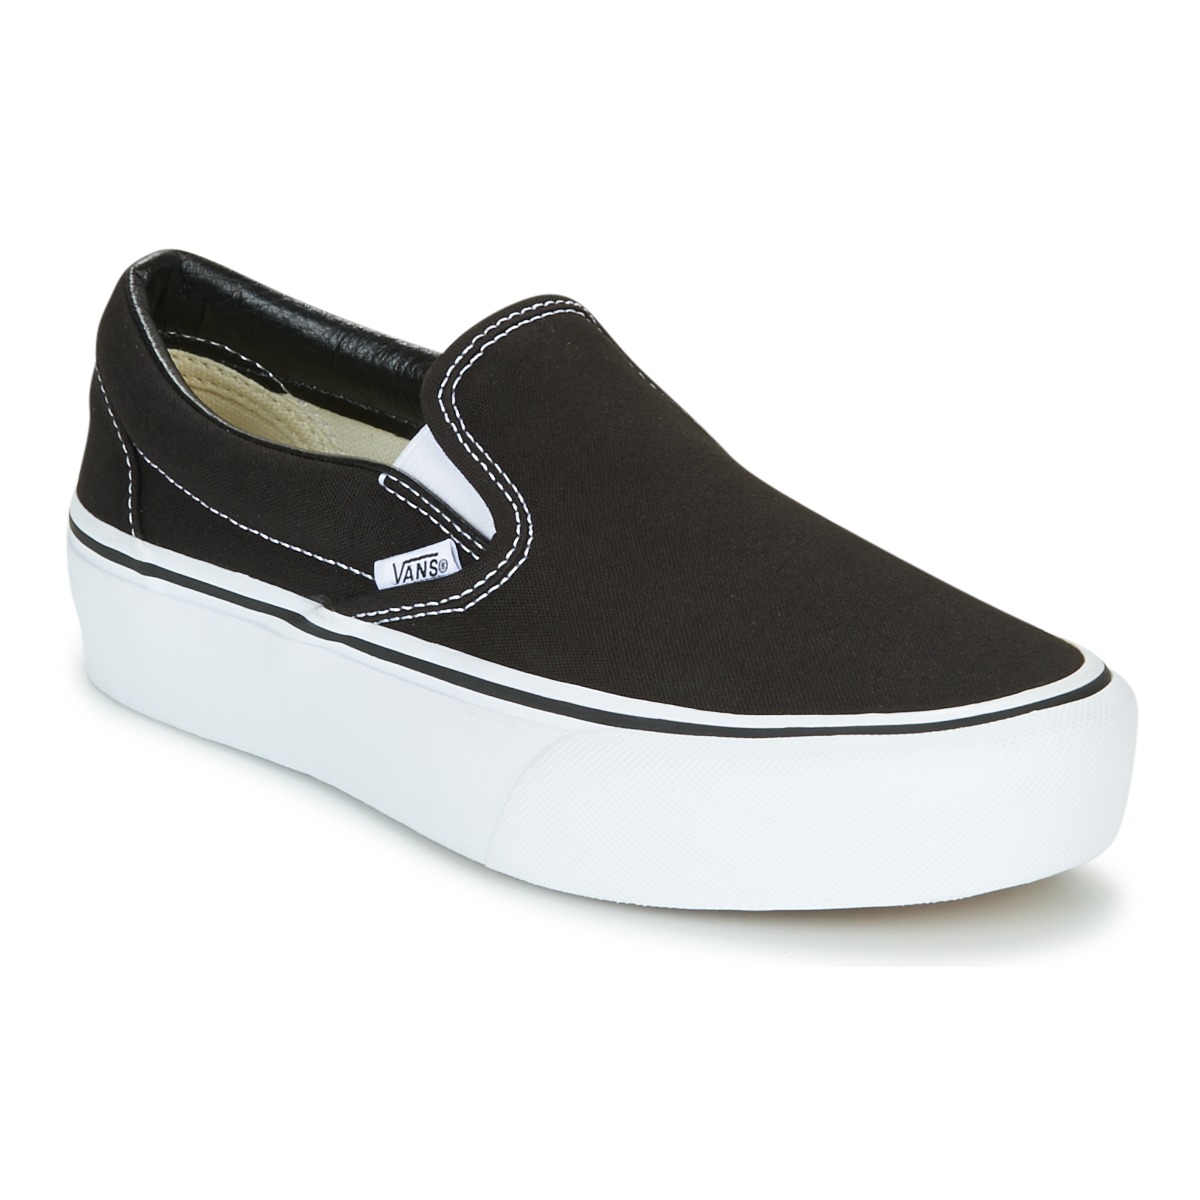 Shoes Women Slip-ons Vans Classic Slip-On Platform Black